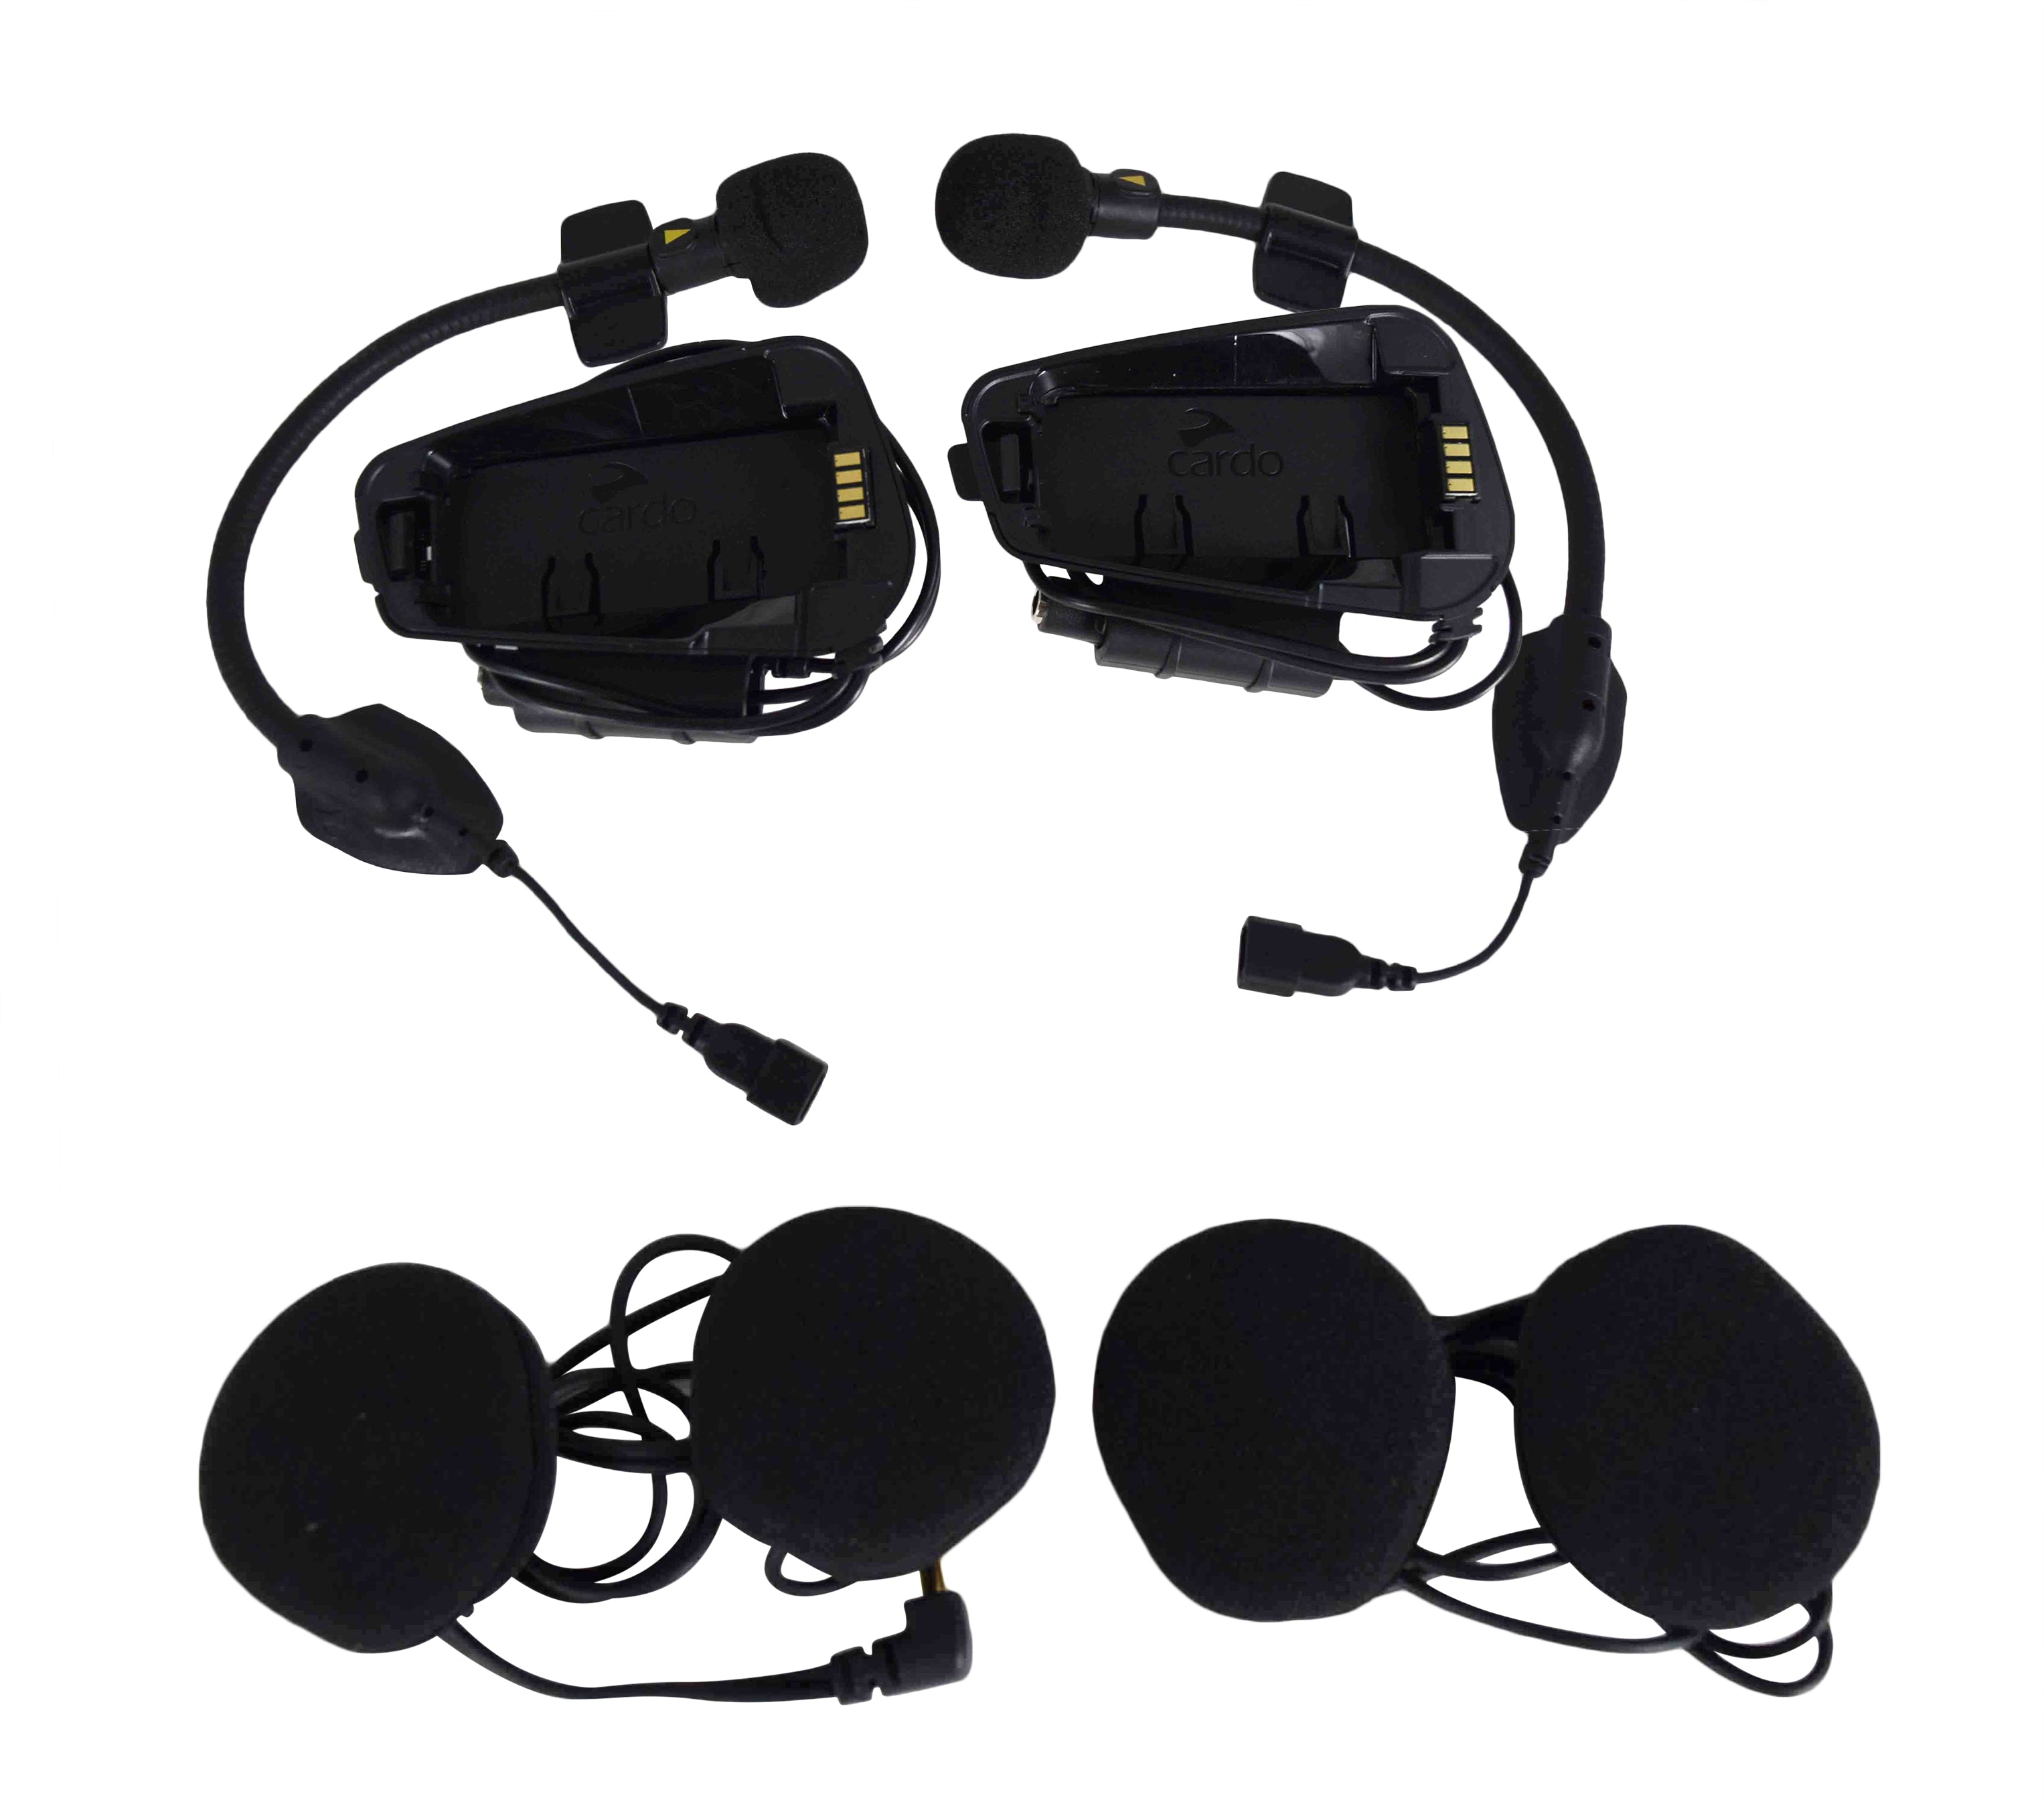 Cardo-Scala-FREECOM-1-DUO-Bluetooth-Motorcycle-Helmet-Communication-Headset-image-3